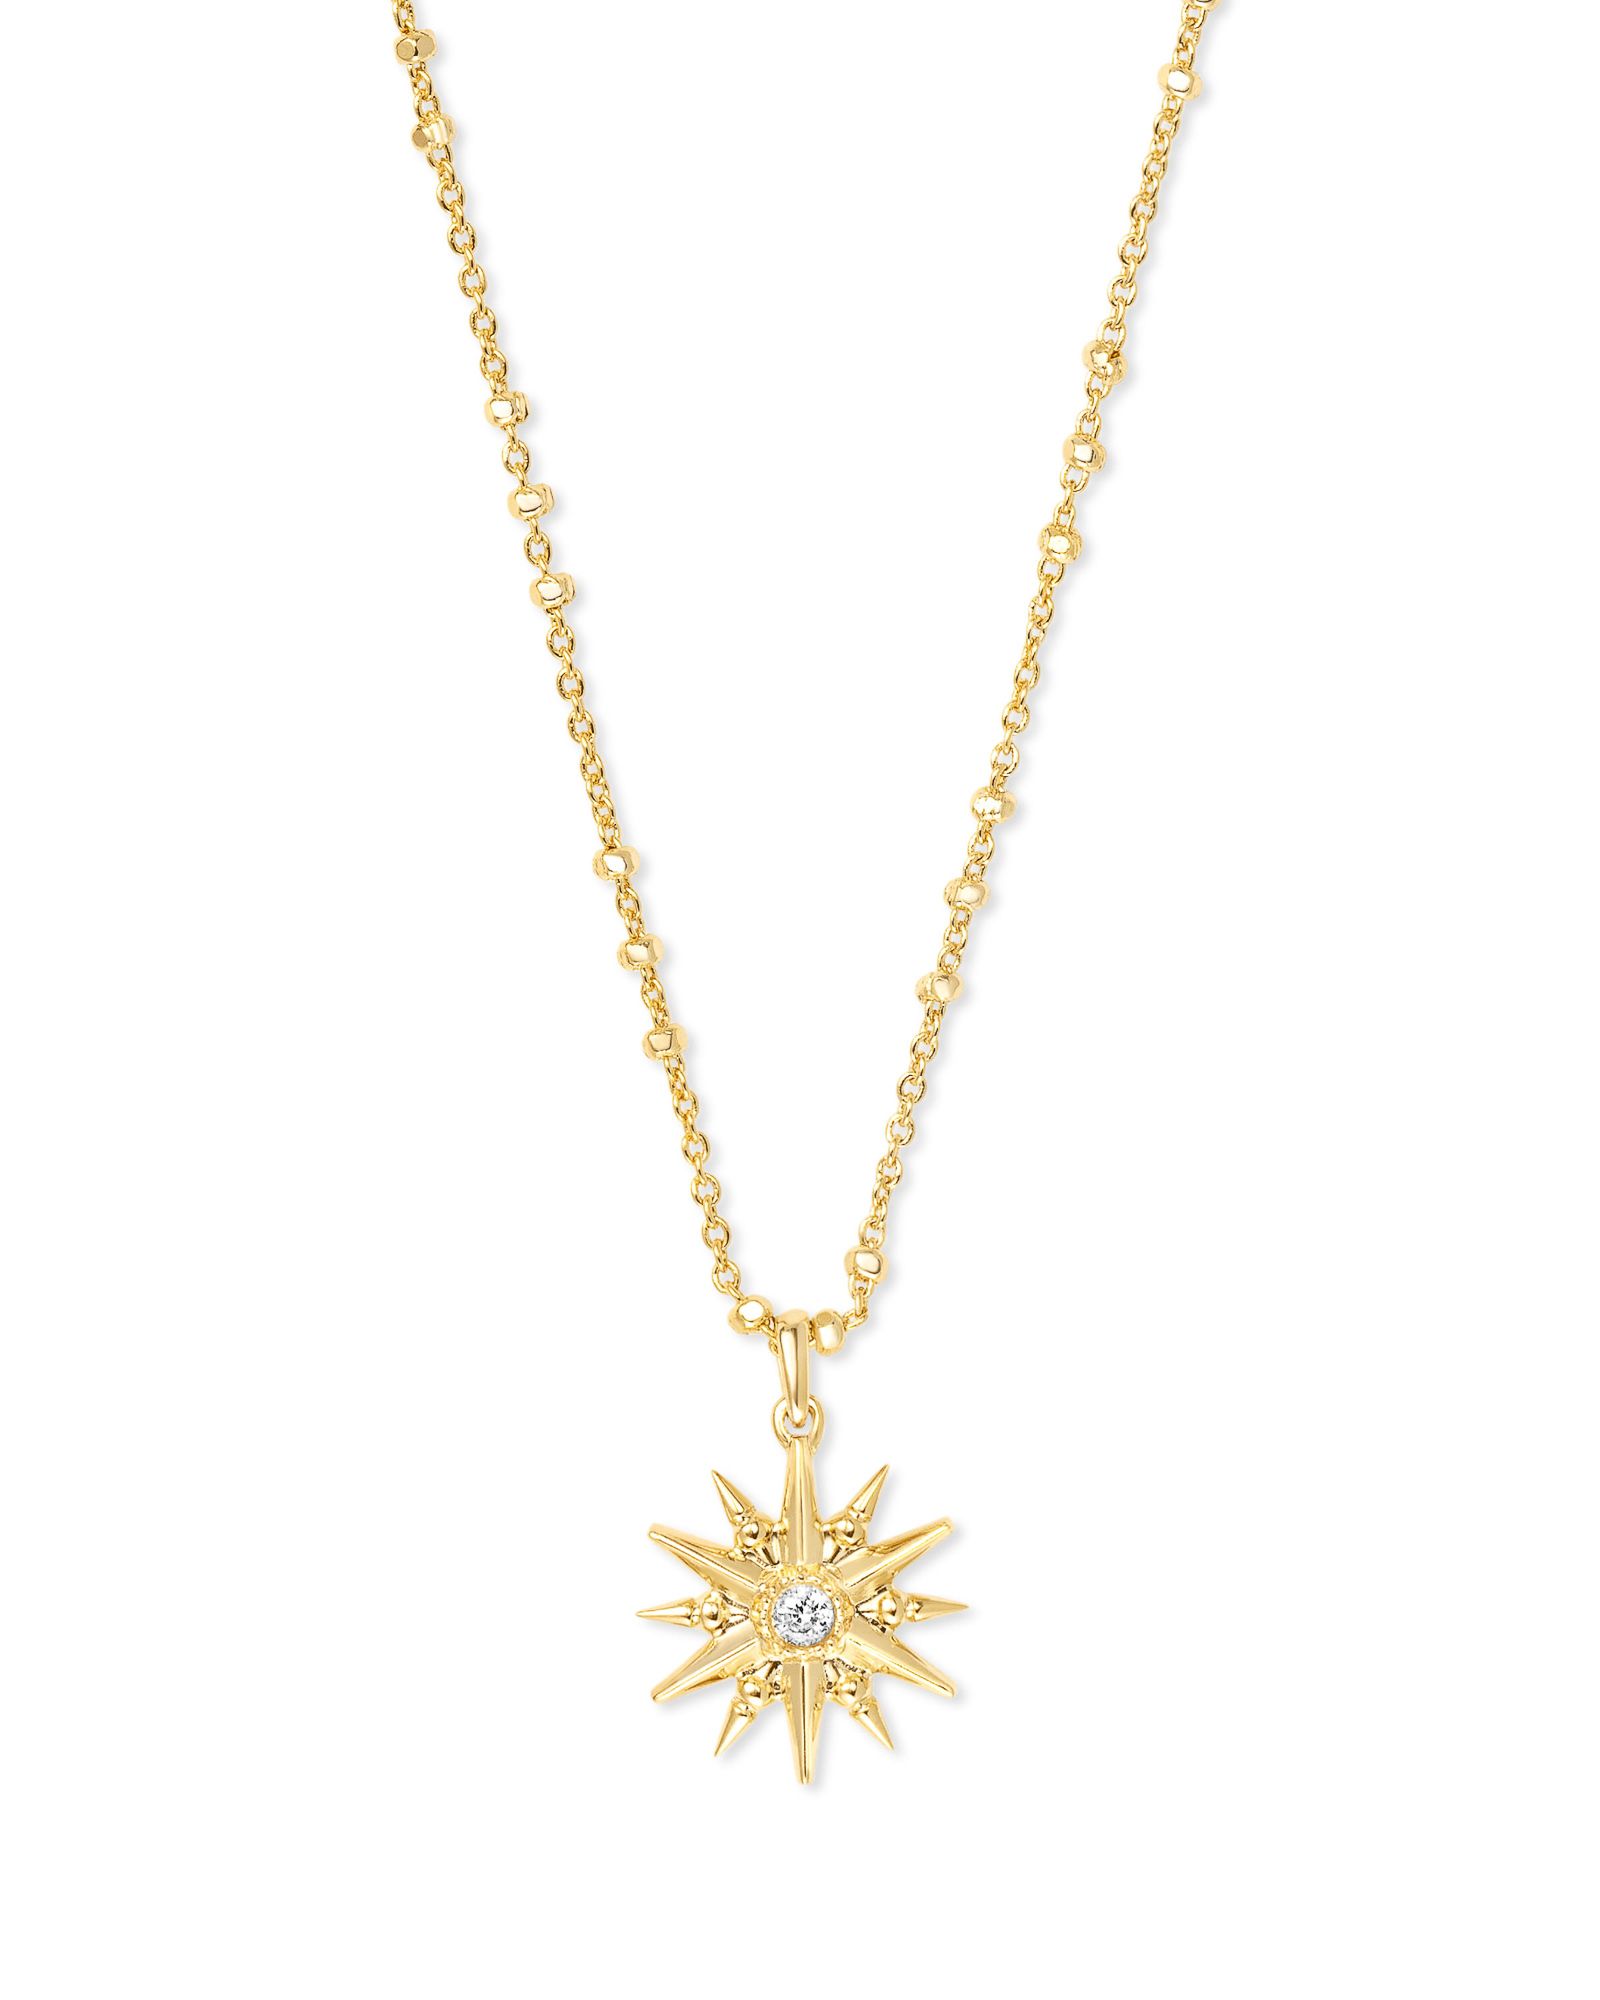 Star Charm Pendant Necklace in Gold | Kendra Scott | Kendra Scott